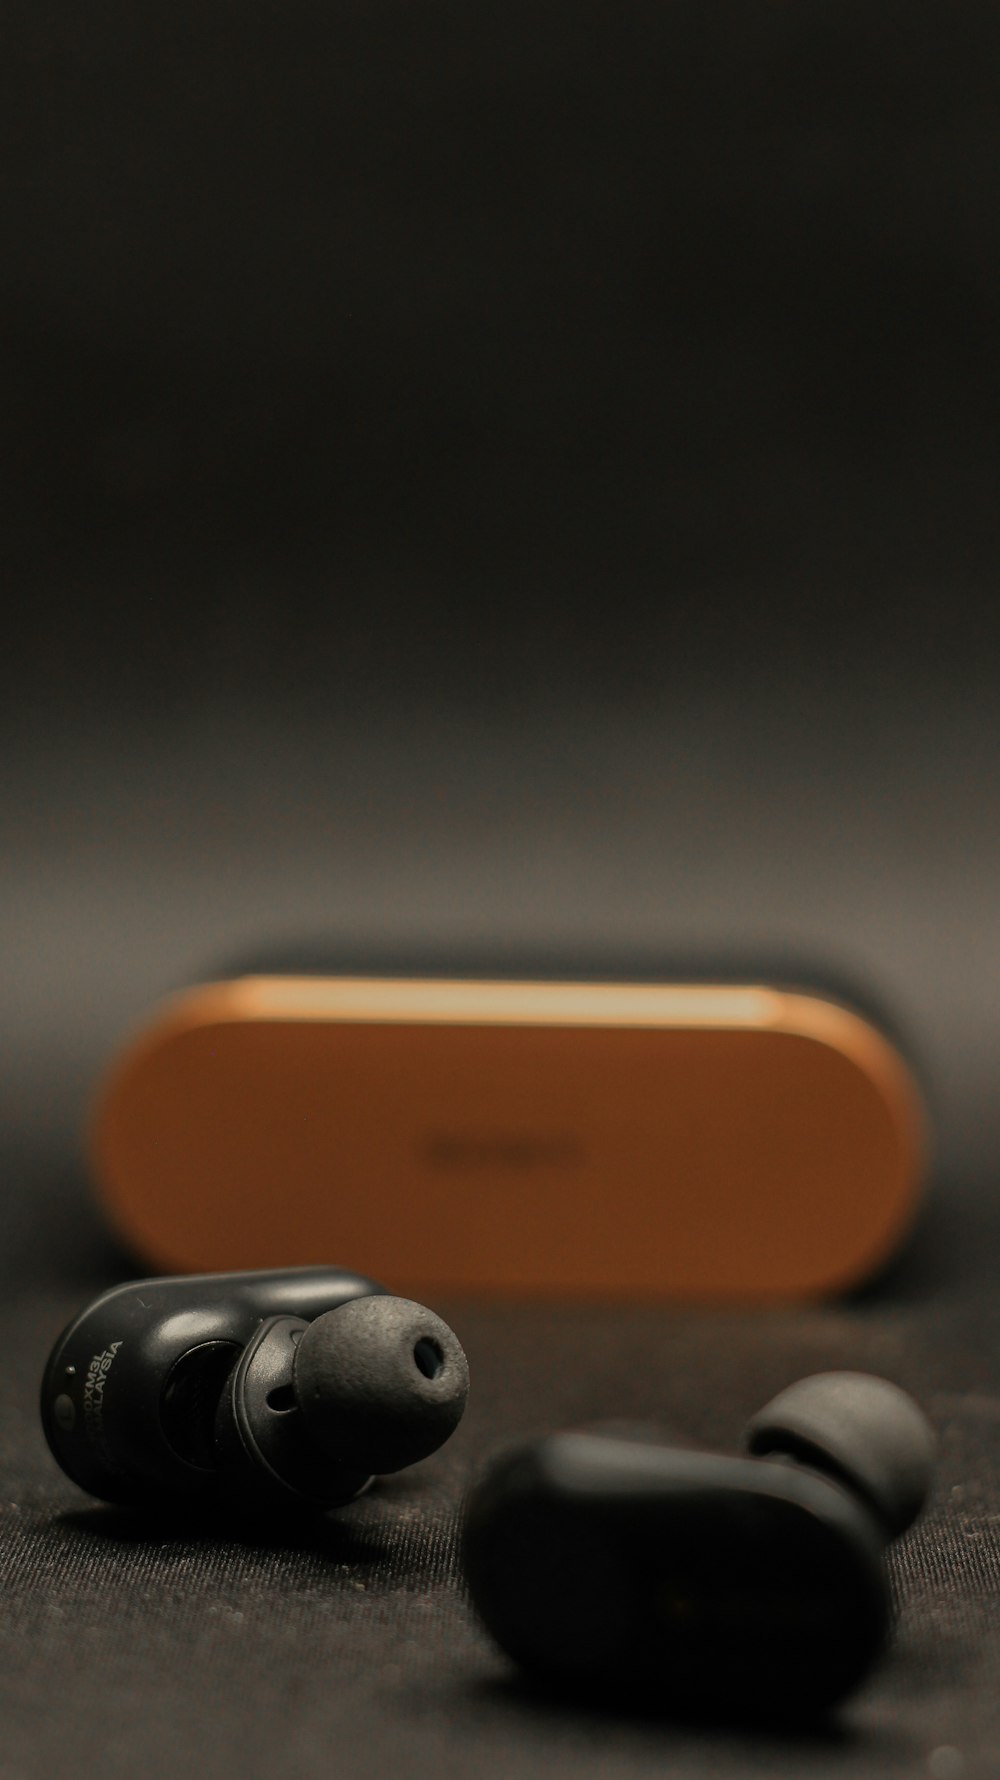 black and orange bluetooth headset